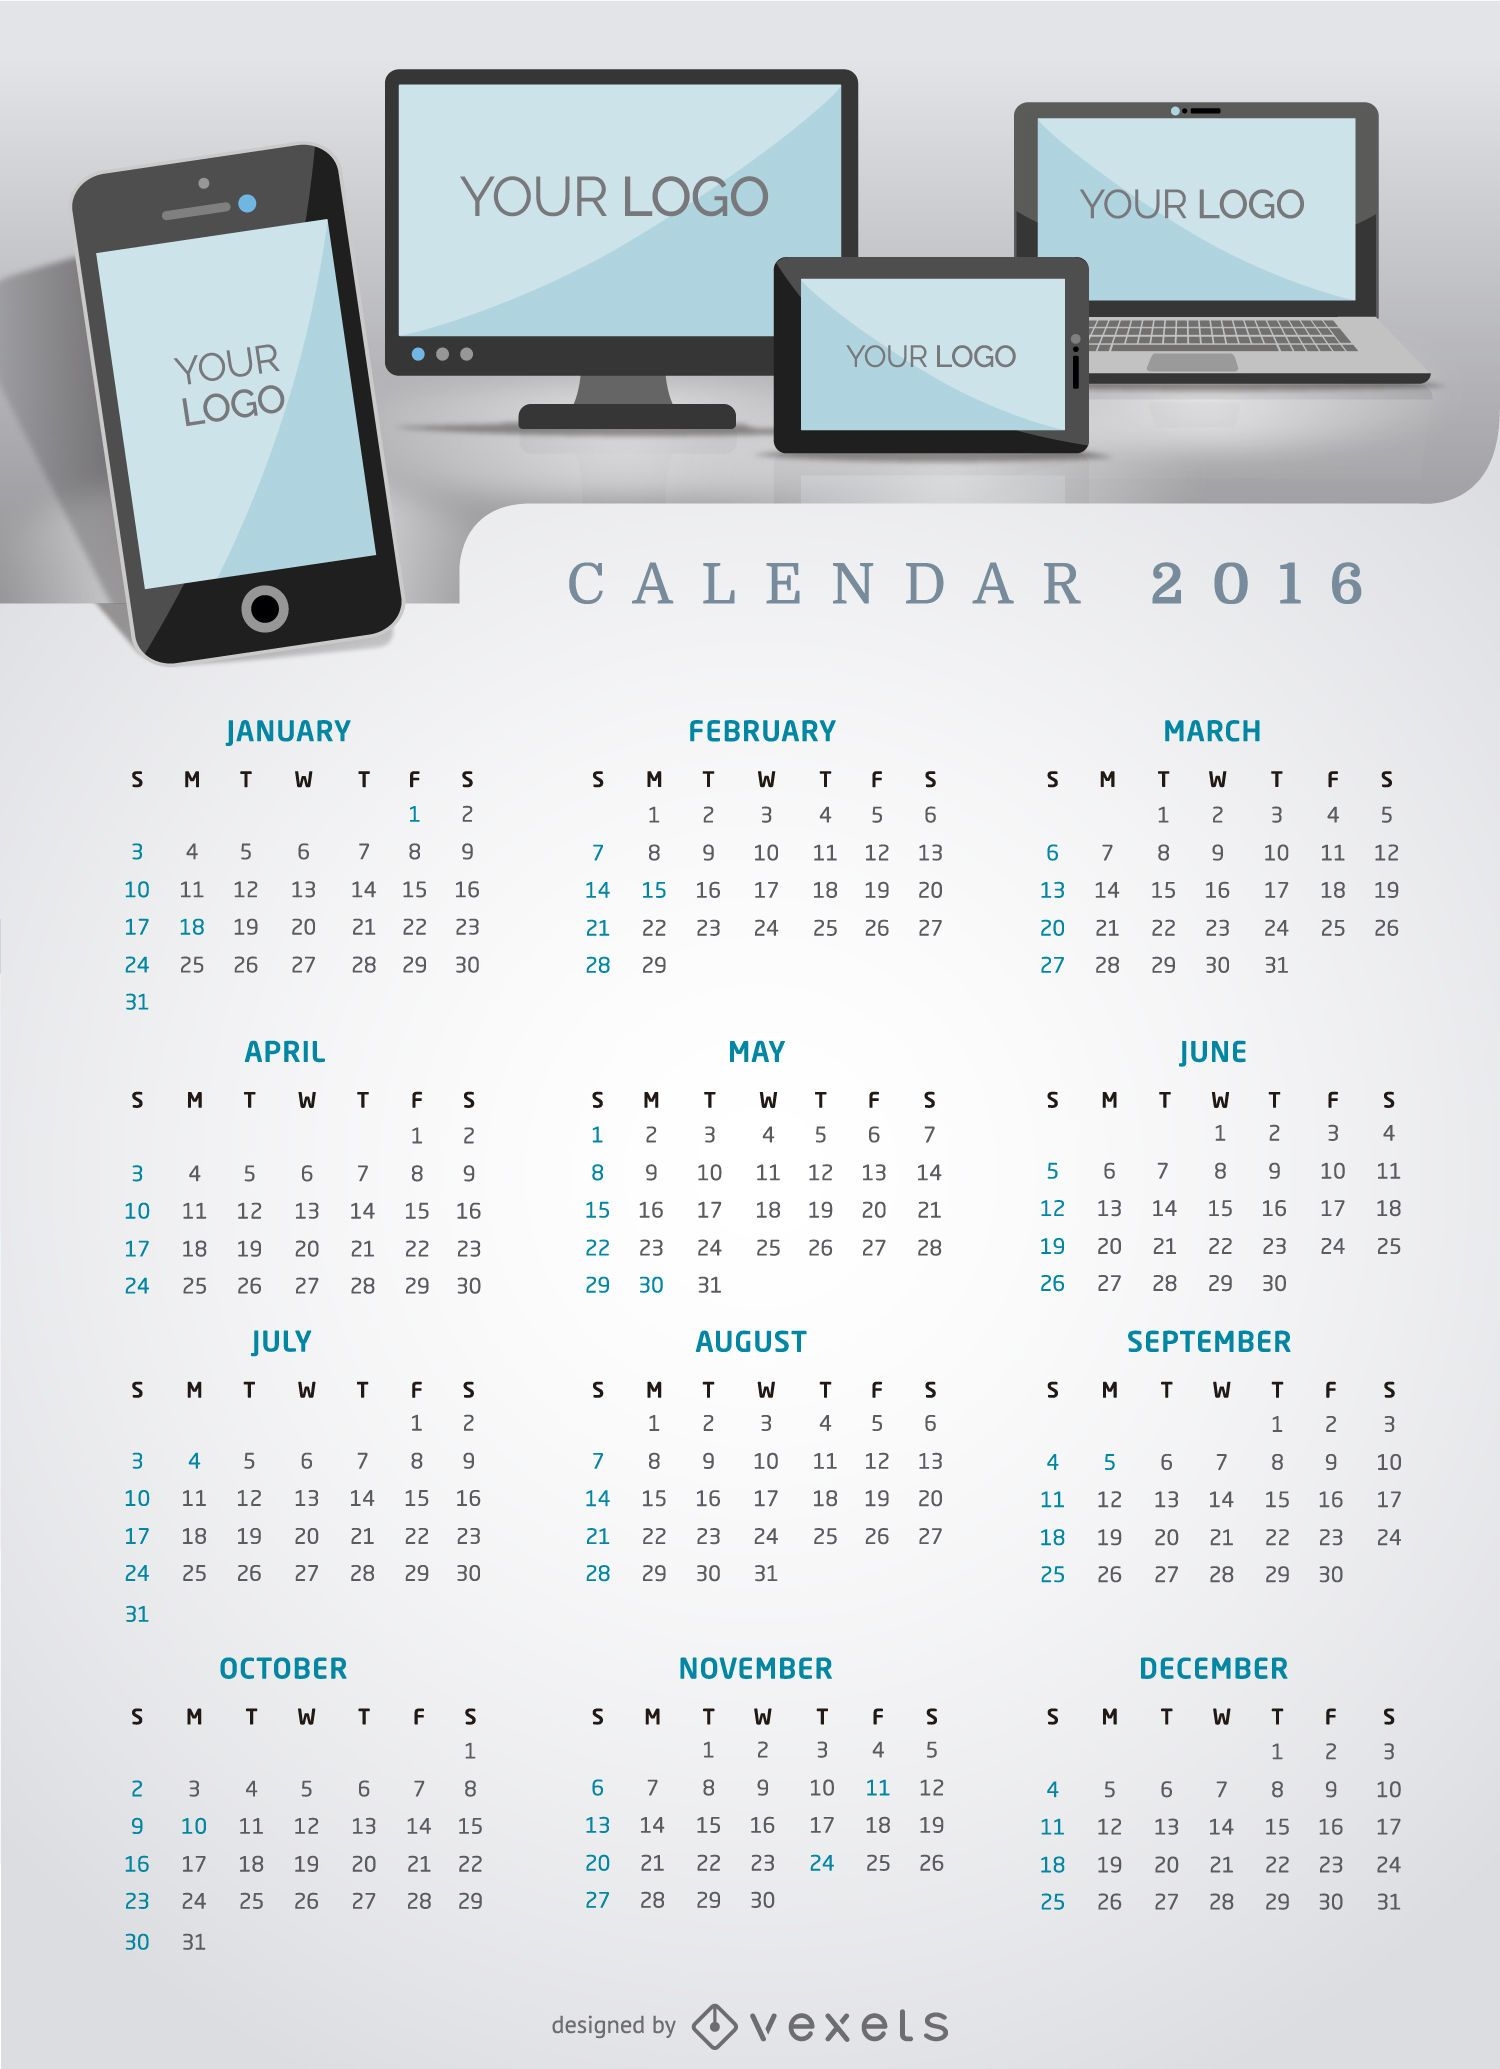 Aplicaci?n multiplataforma o sitio web de Calendar 2016